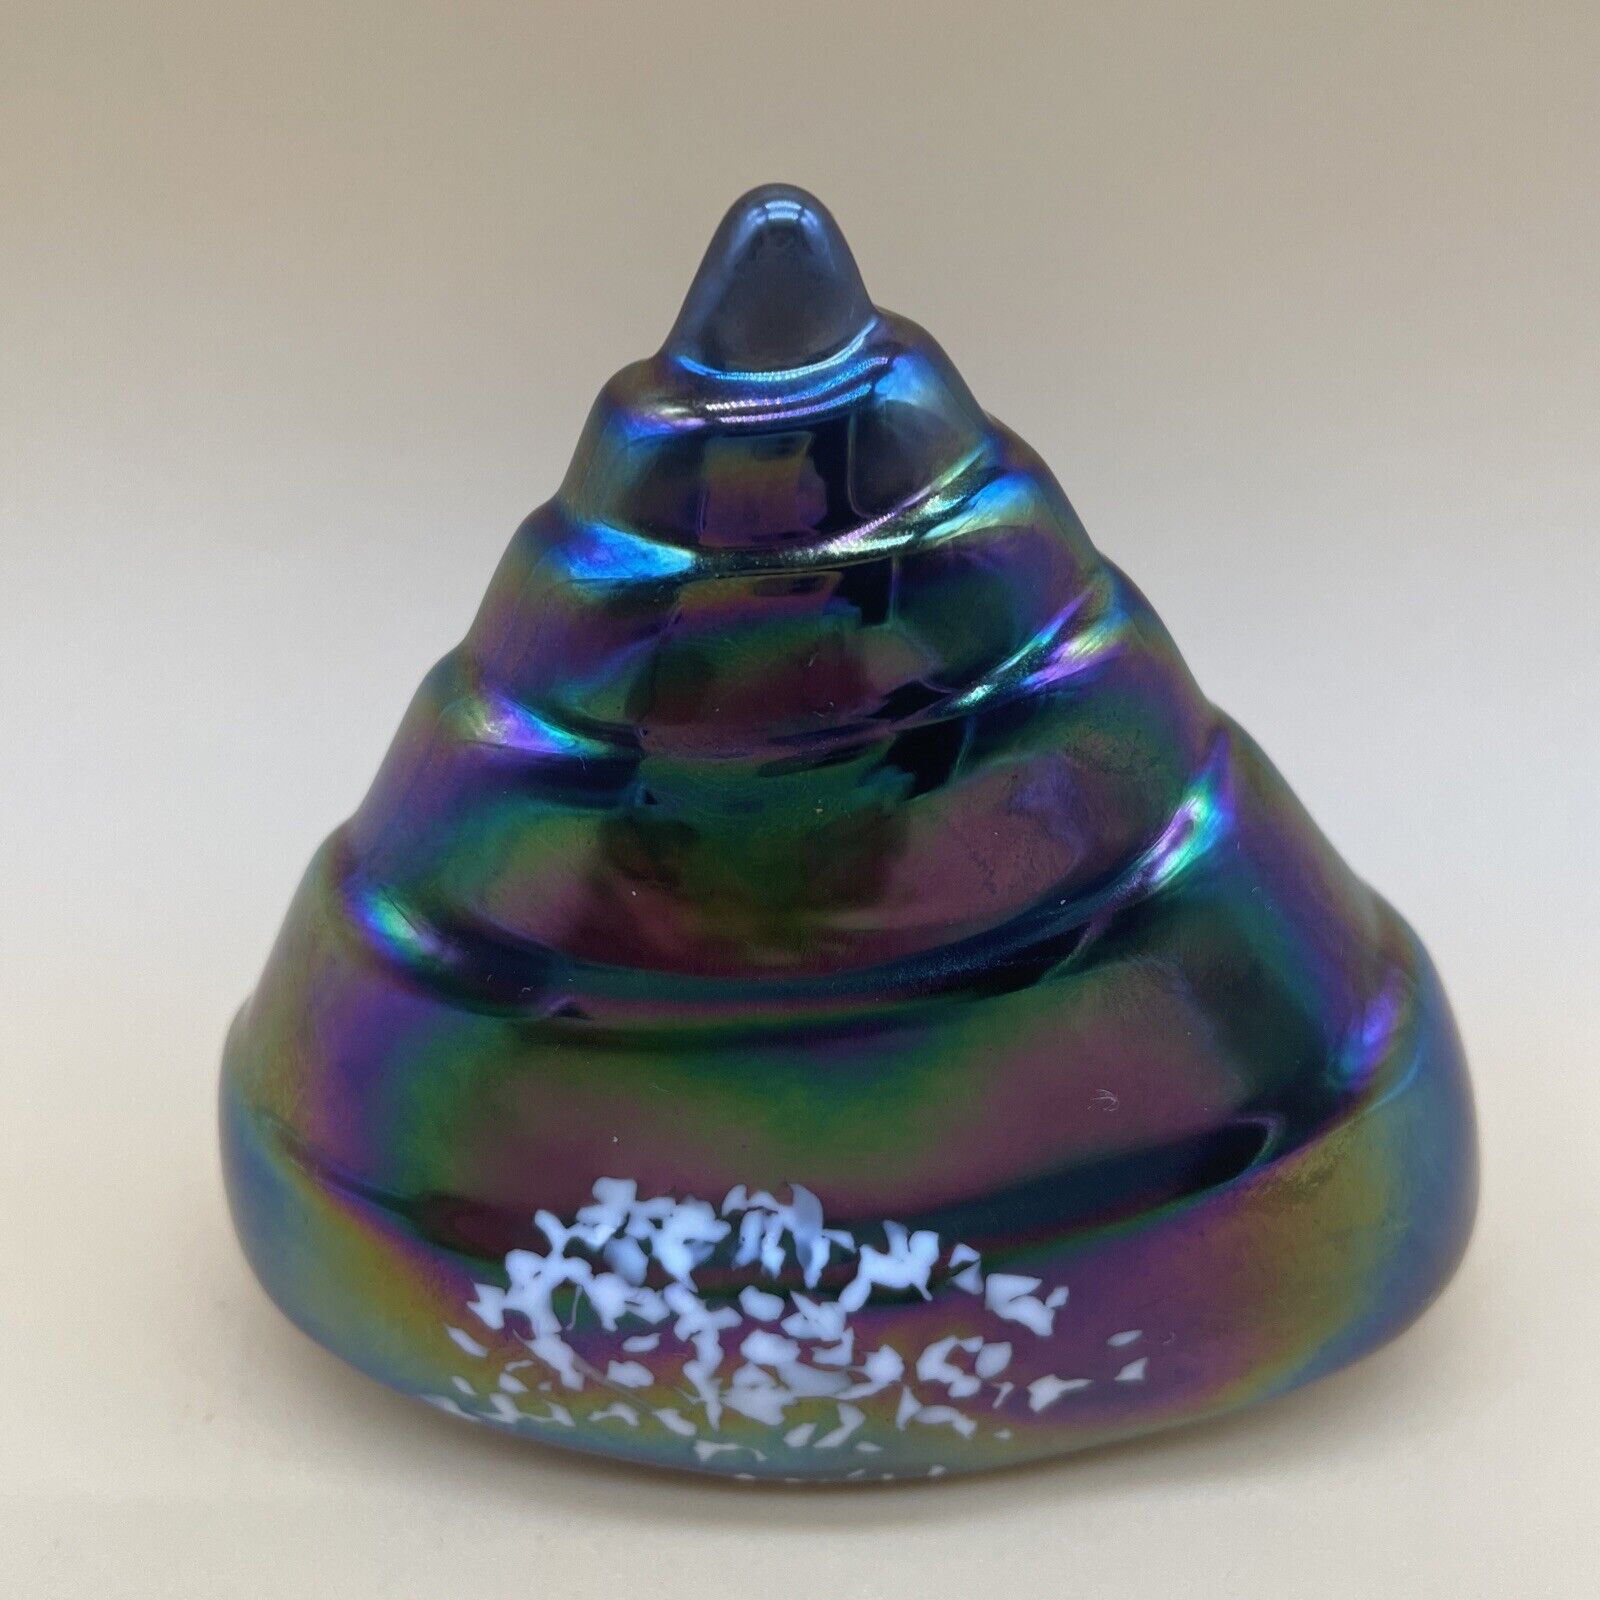 VTG Hawaiian Handblown Volcanic Glass Pele's Iridescent Collectible Paperweight